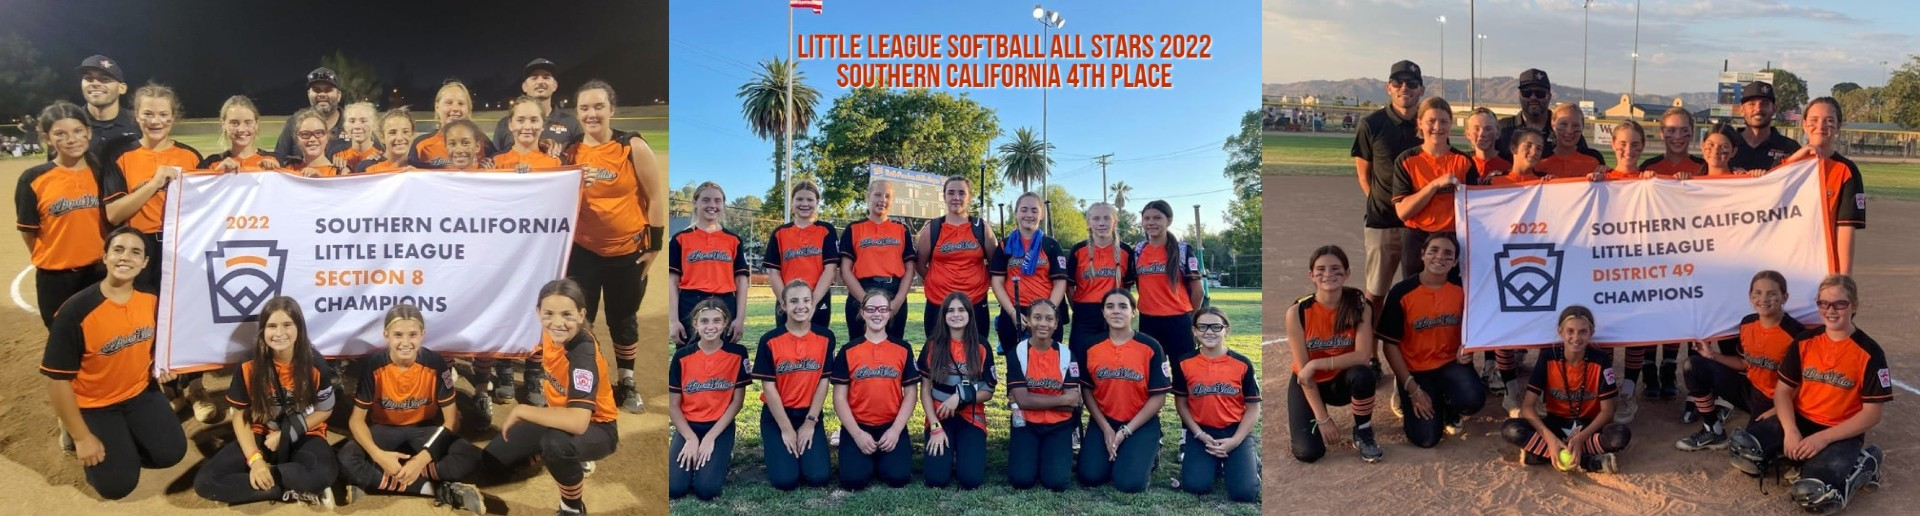 Little League Softball All Stars 2022